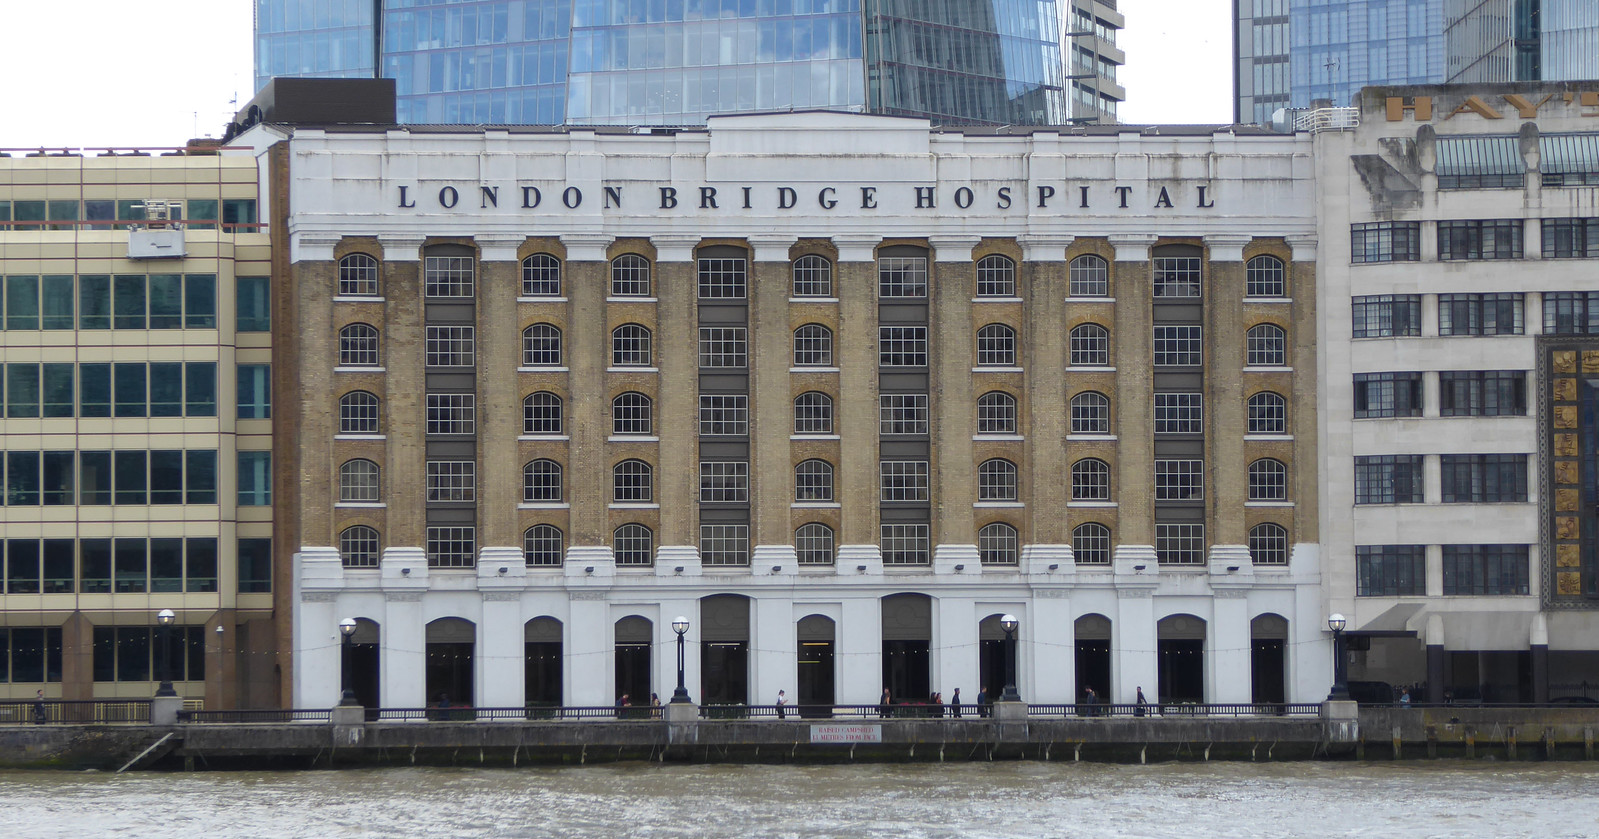 London Bridge hospital